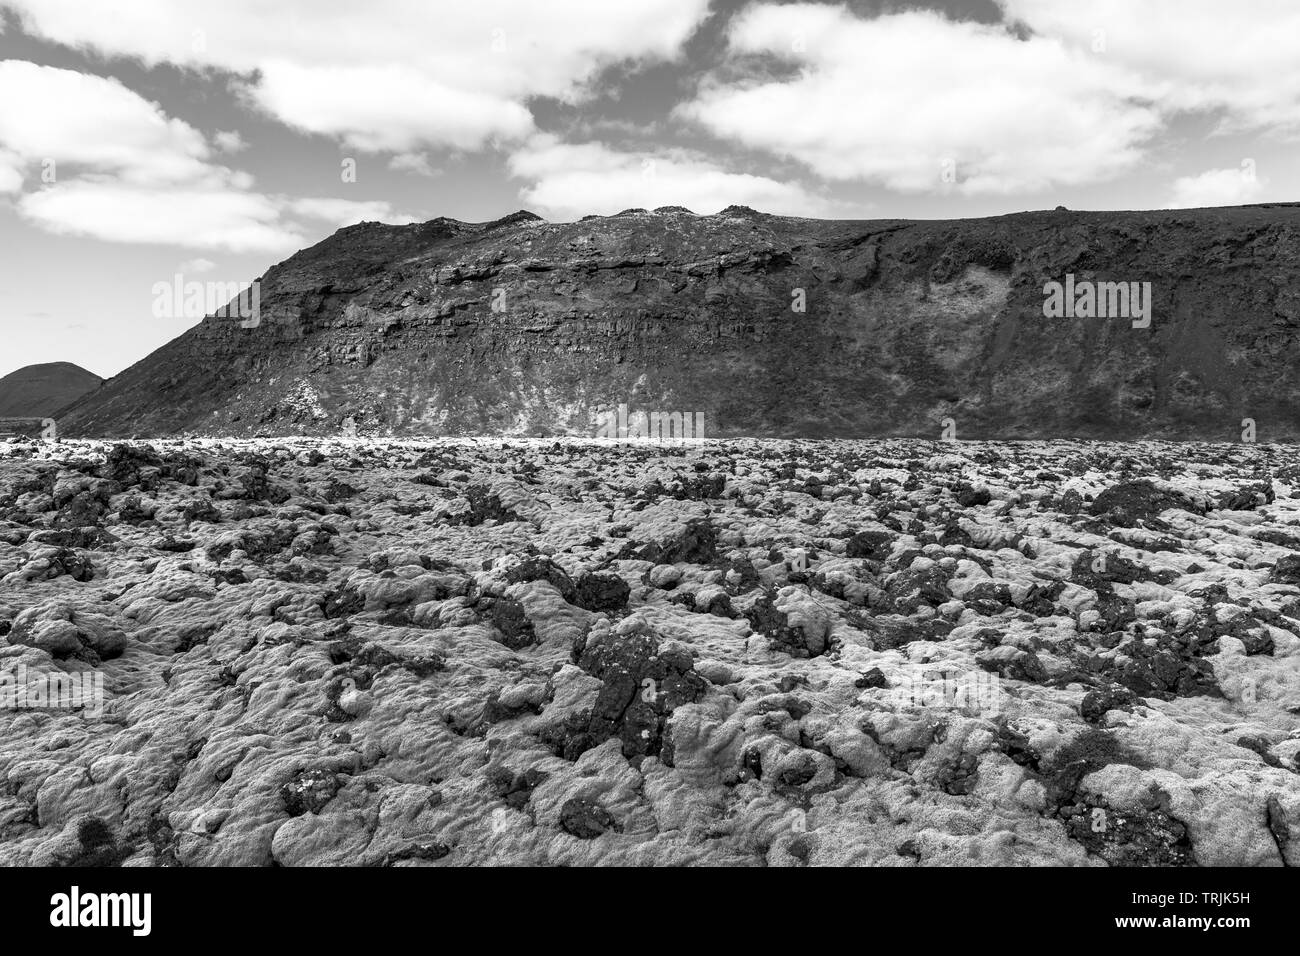 KRYSUVIKURBERG, ICELAND - Lava field, volcanic landscape in southwestern Iceland. Stock Photo